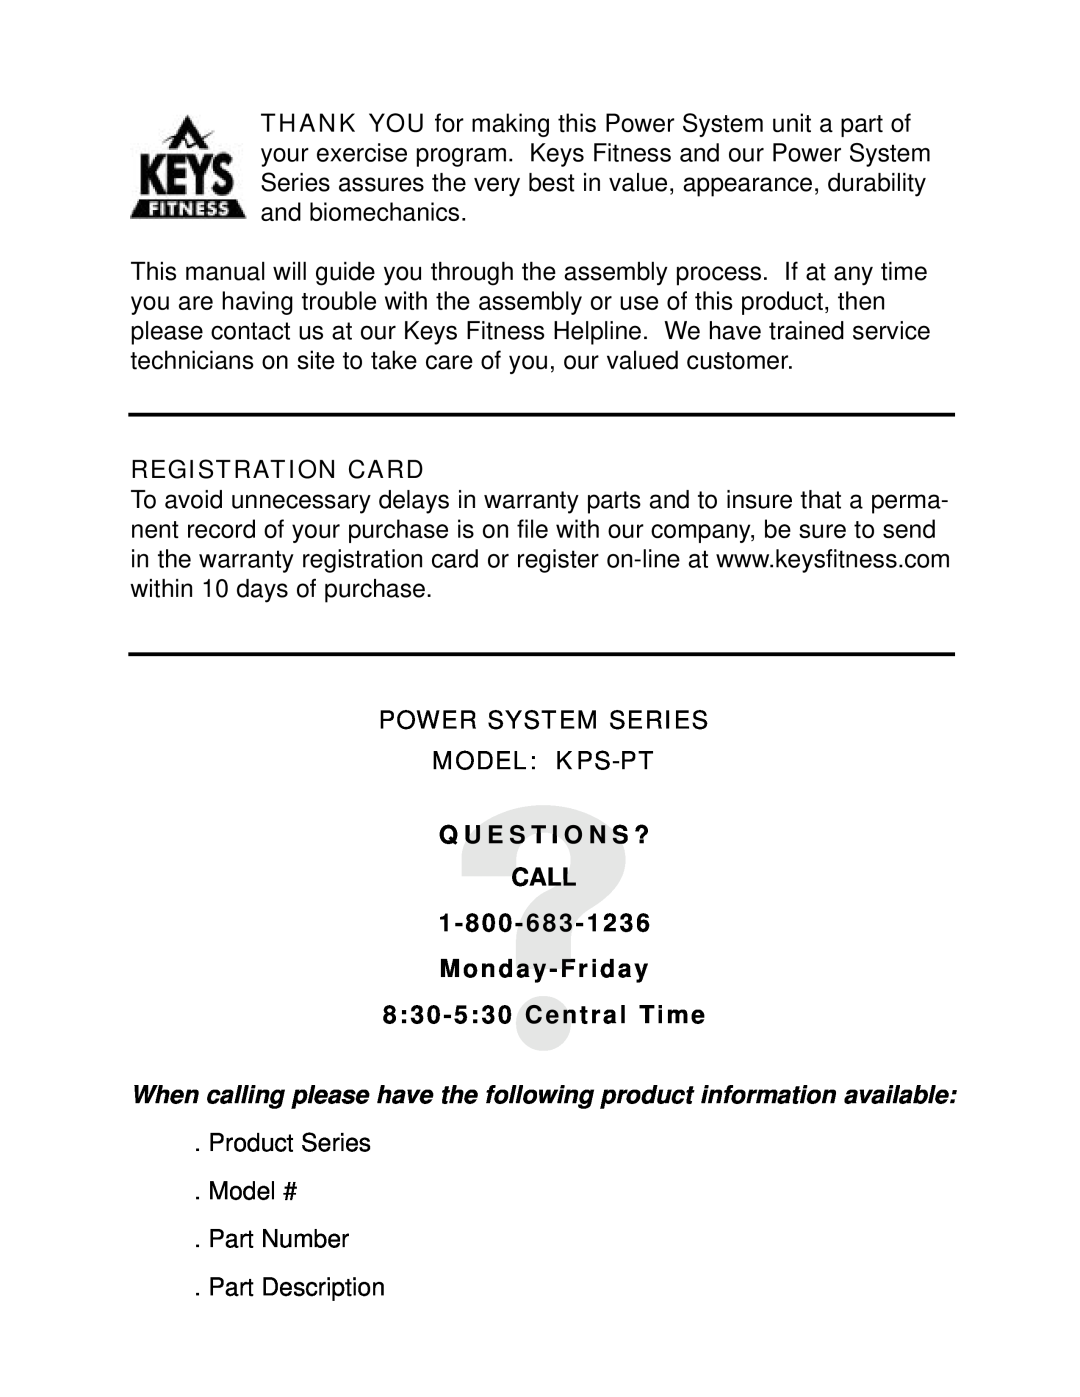 Keys Fitness KPS-PT manual Registration Card, Power System Series Model Kps-Pt Q U E S T I O N S ? Call, Central Time 